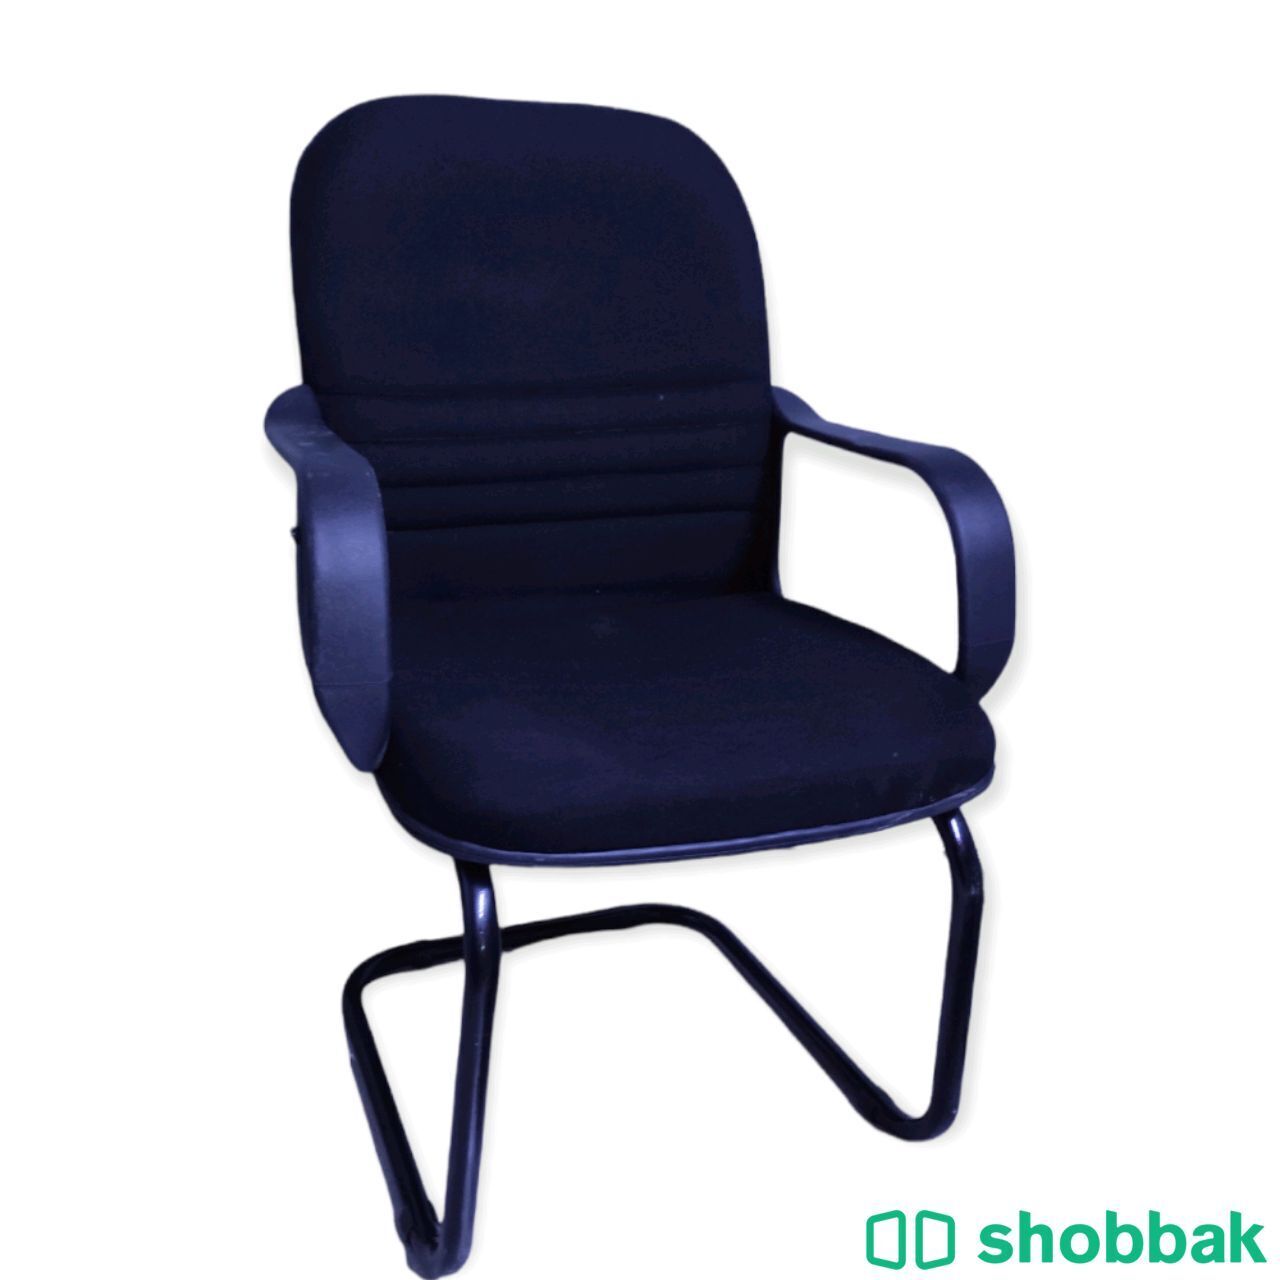 كرسي قماش ظهر قصير ثابت  Shobbak Saudi Arabia